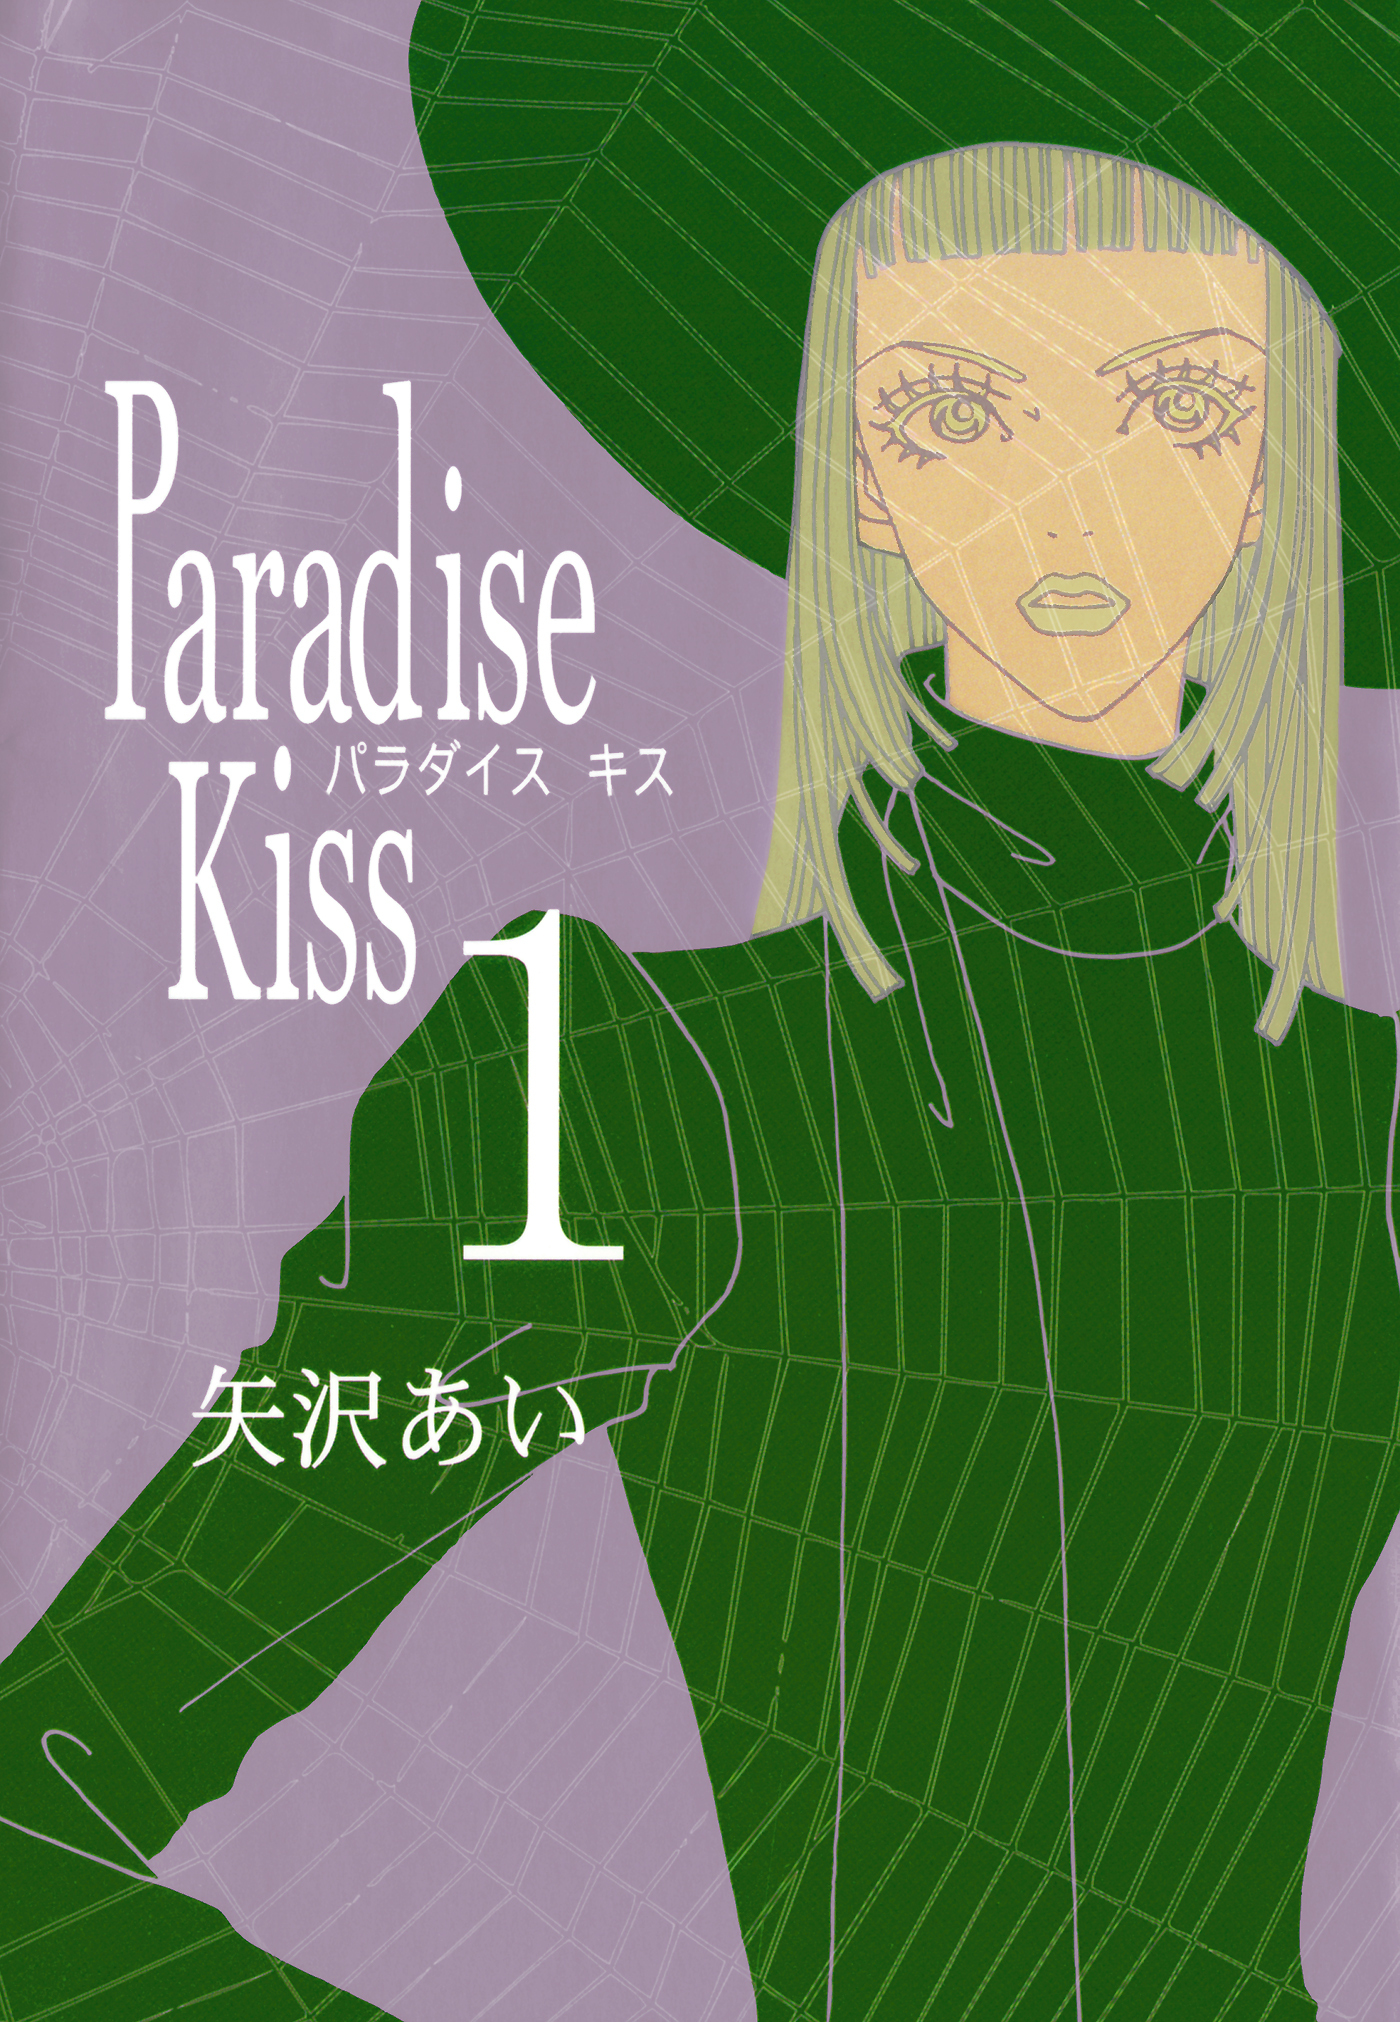 Paradise Kiss 無料 試し読みなら Amebaマンガ 旧 読書のお時間です